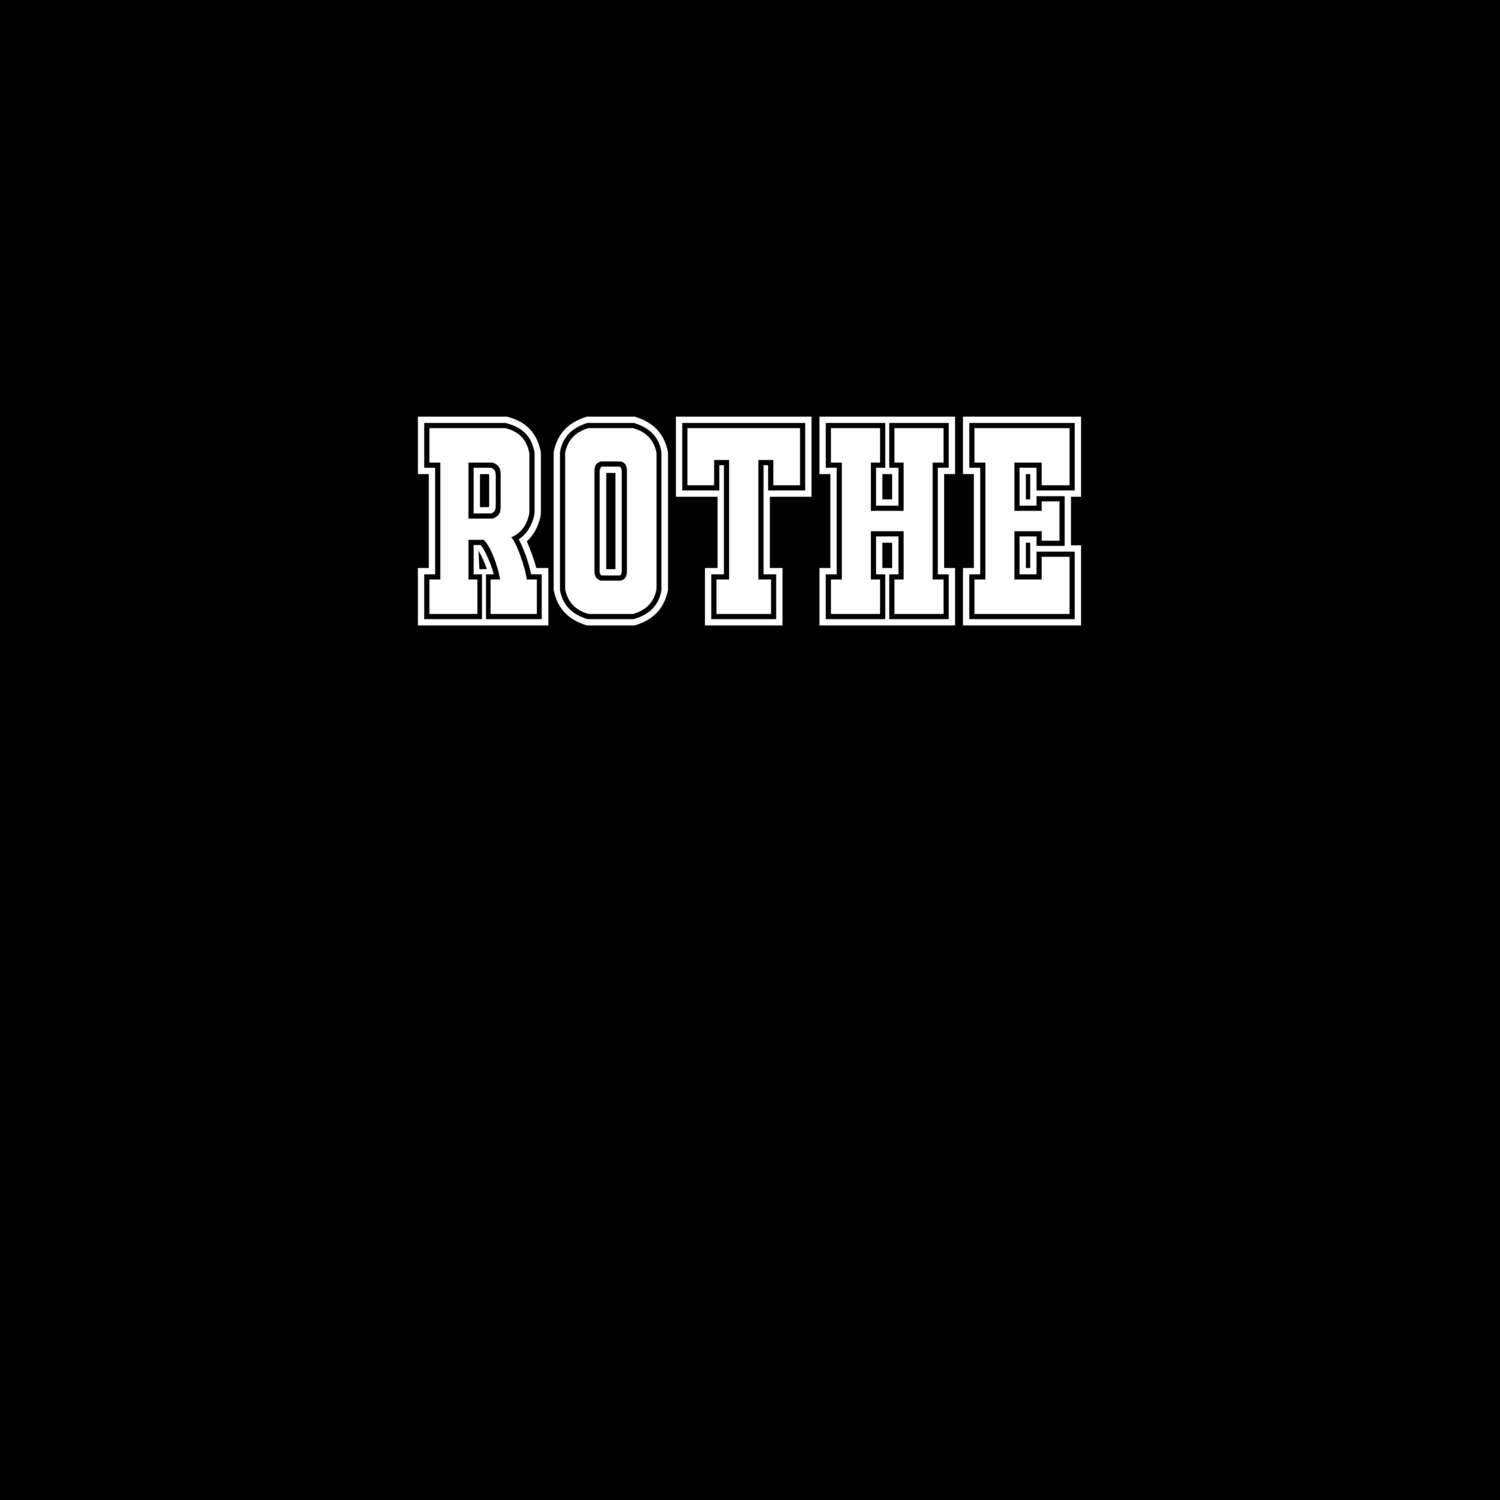 Rothe T-Shirt »Classic«